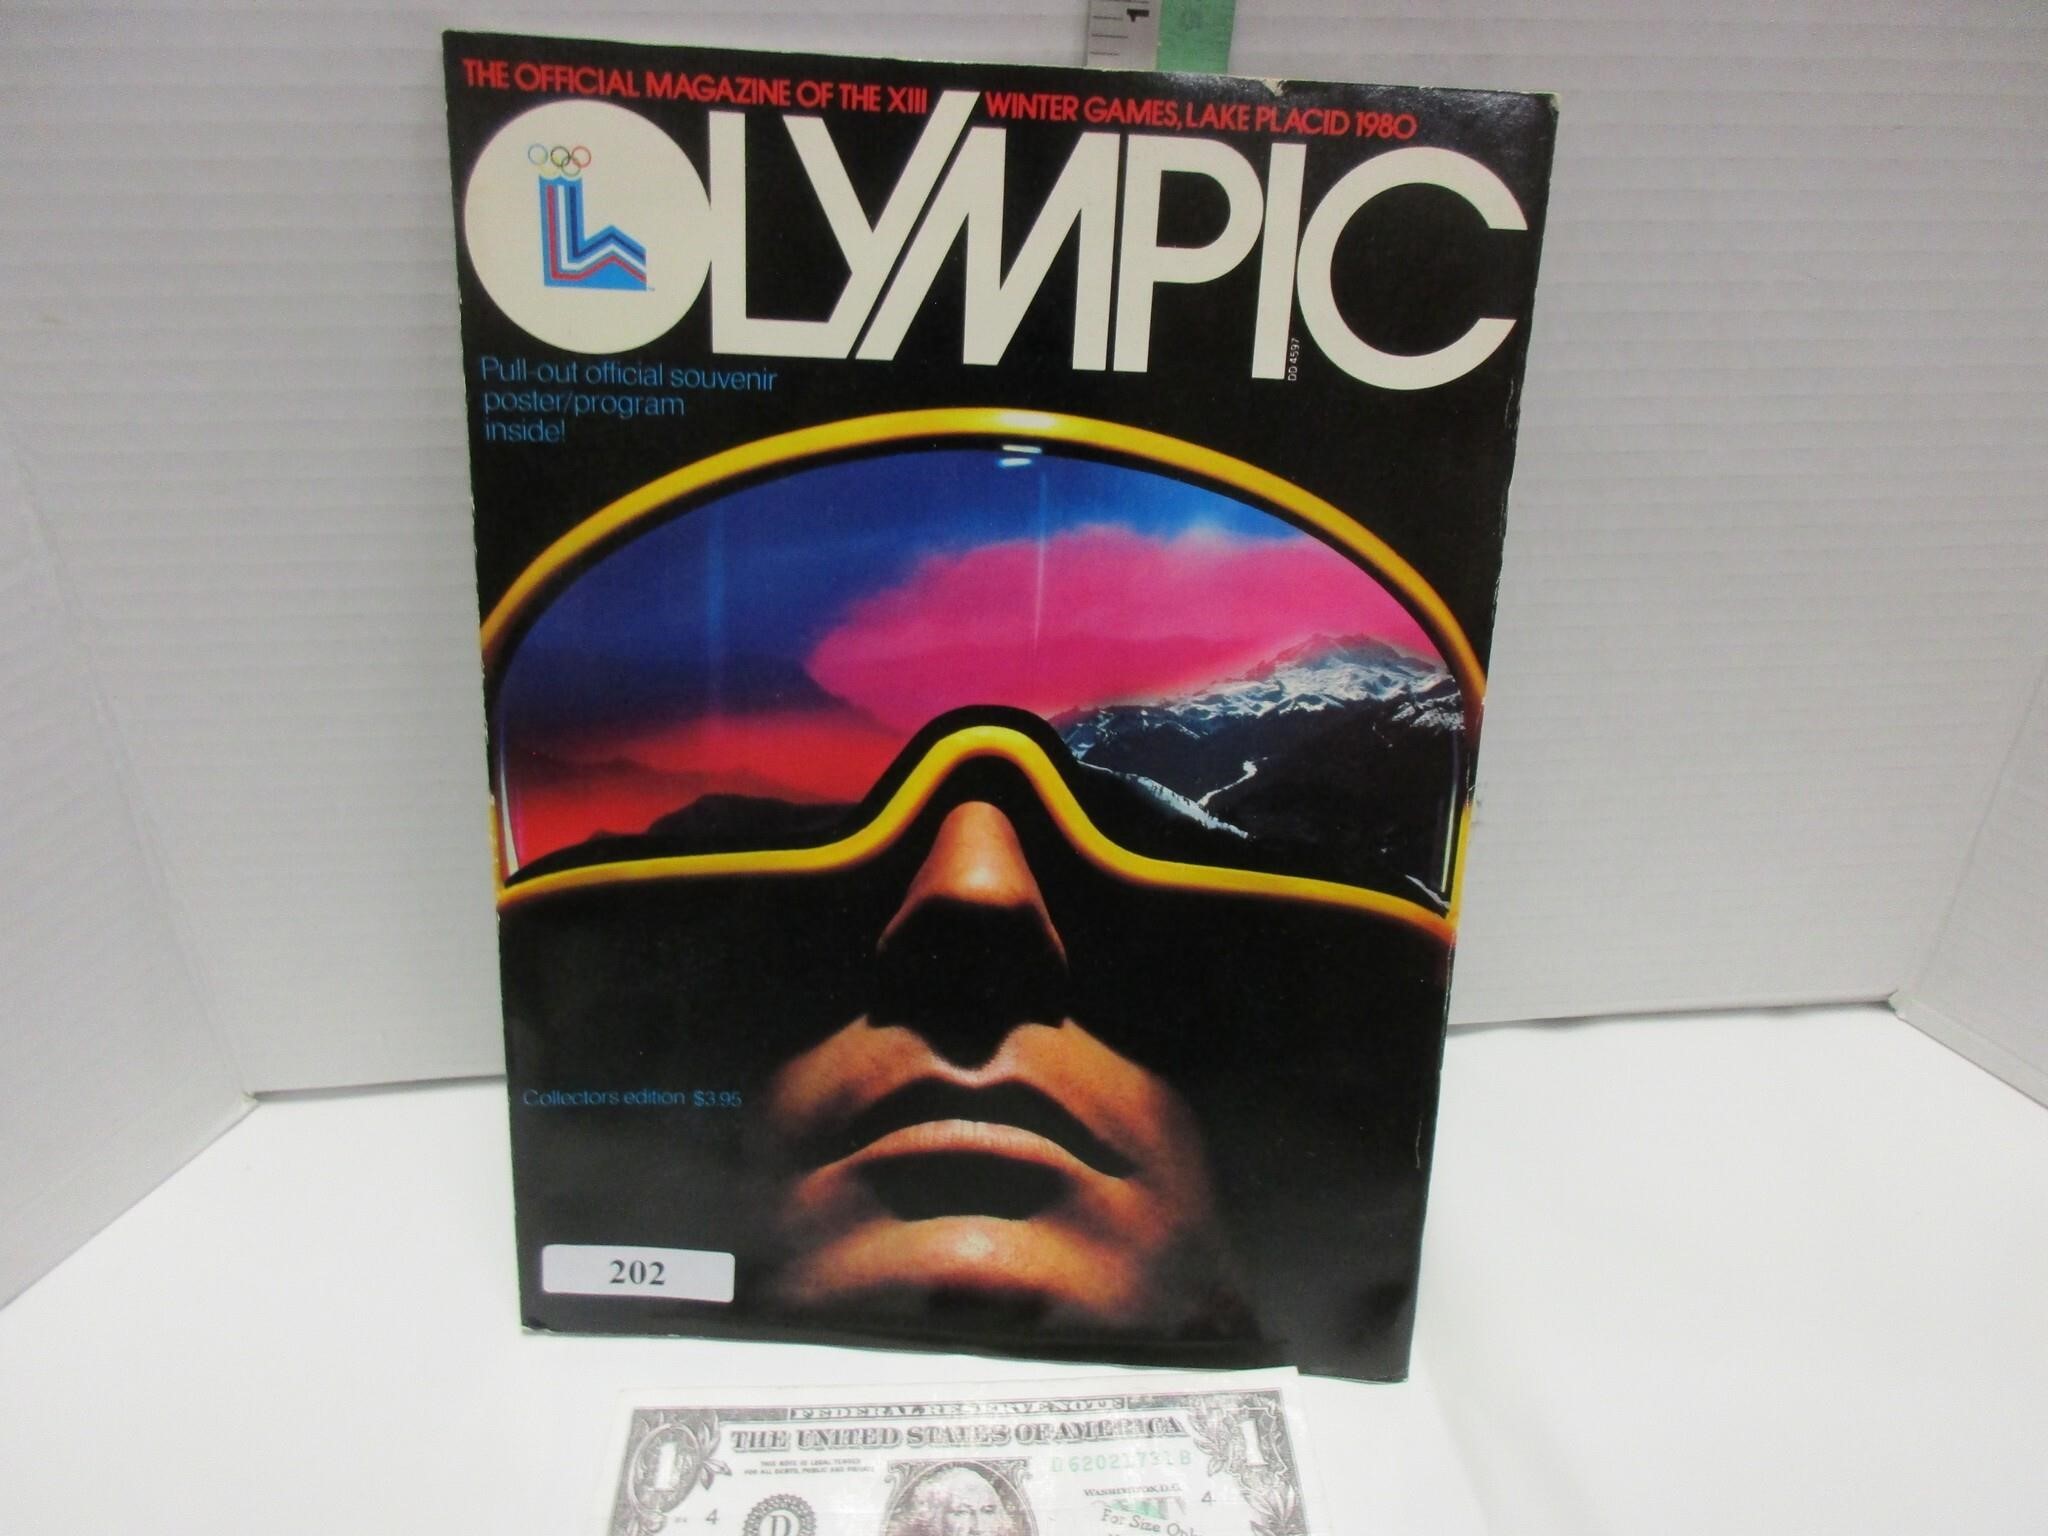 Vintage 1980 Olympic magazine